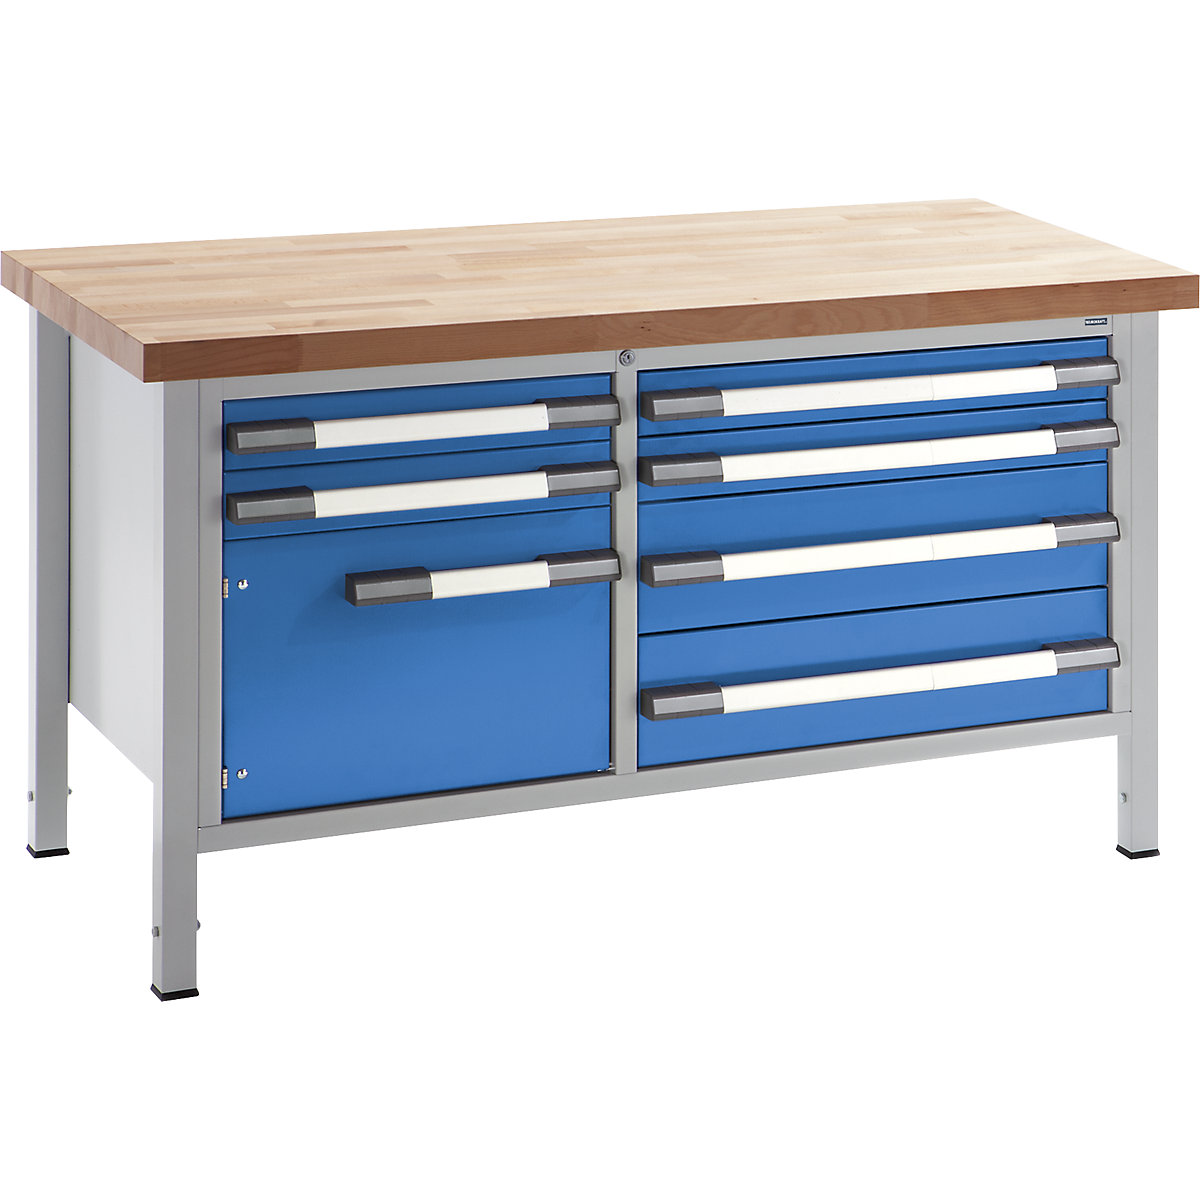 EUROKRAFTpro – Height-adjustable workbench, frame construction, width 1500 mm, 6 drawers, 1 door, grey / blue